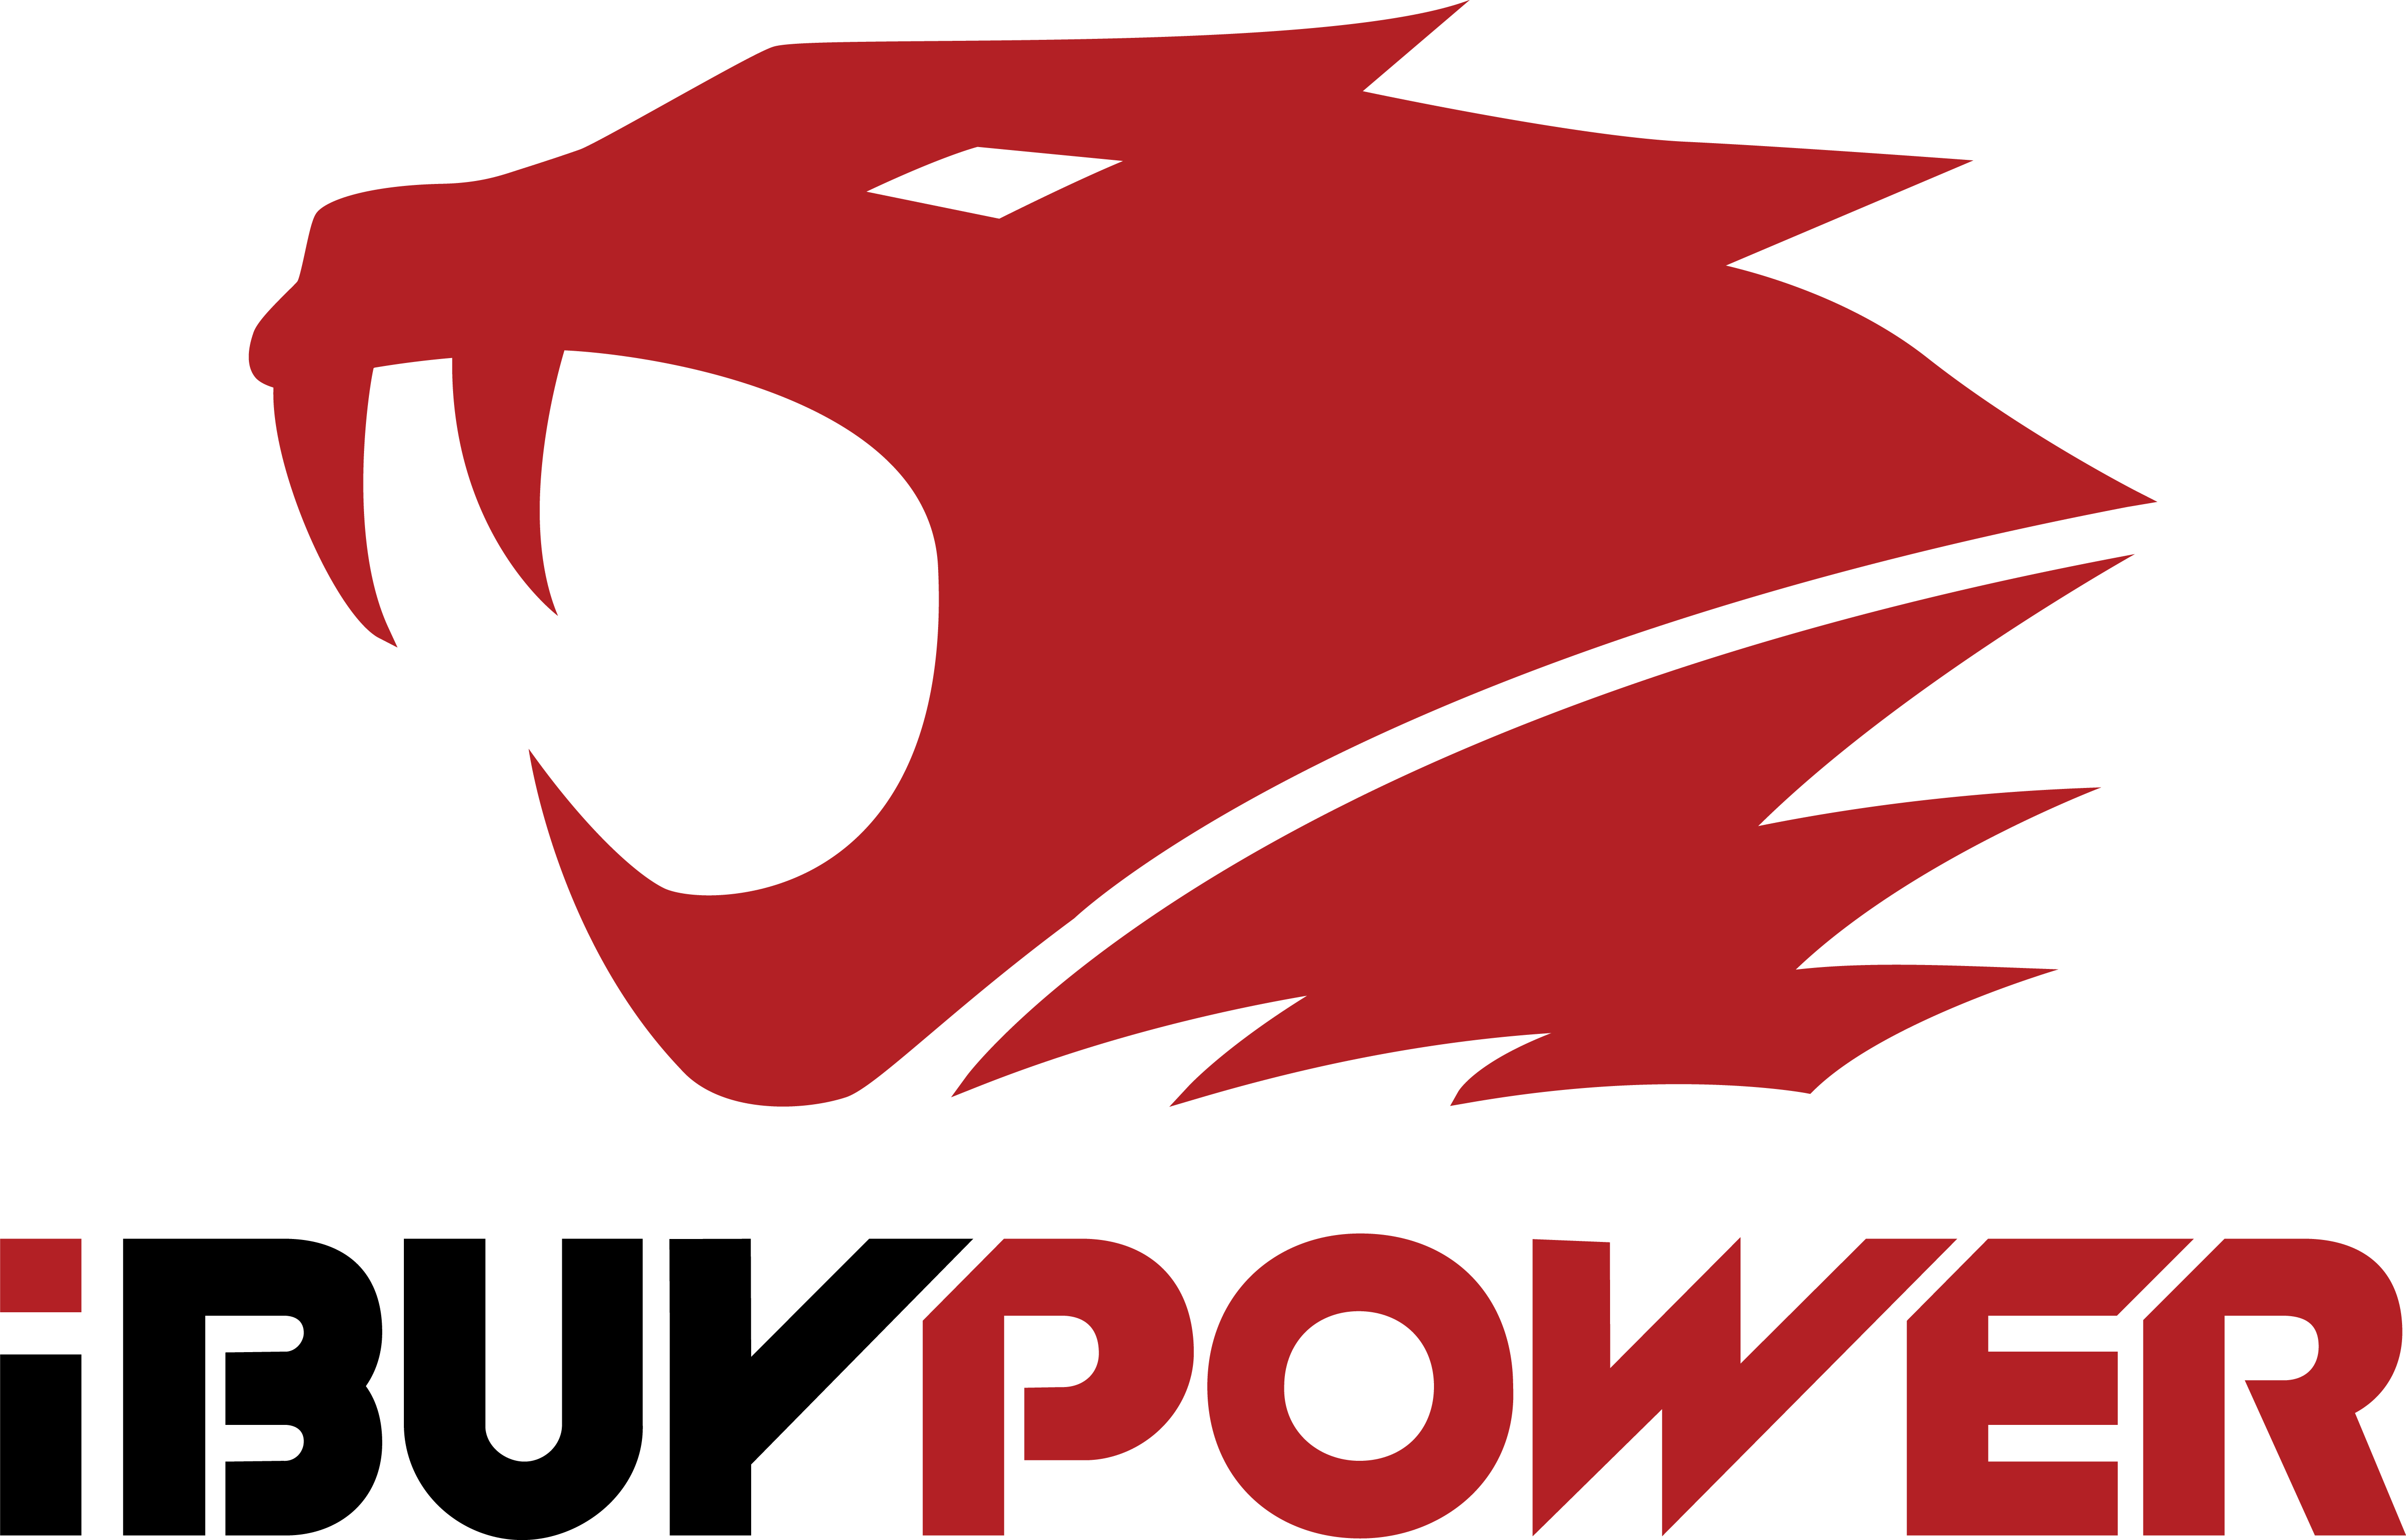 Ibuypower - Buy Power Cs Go (4891x3131)